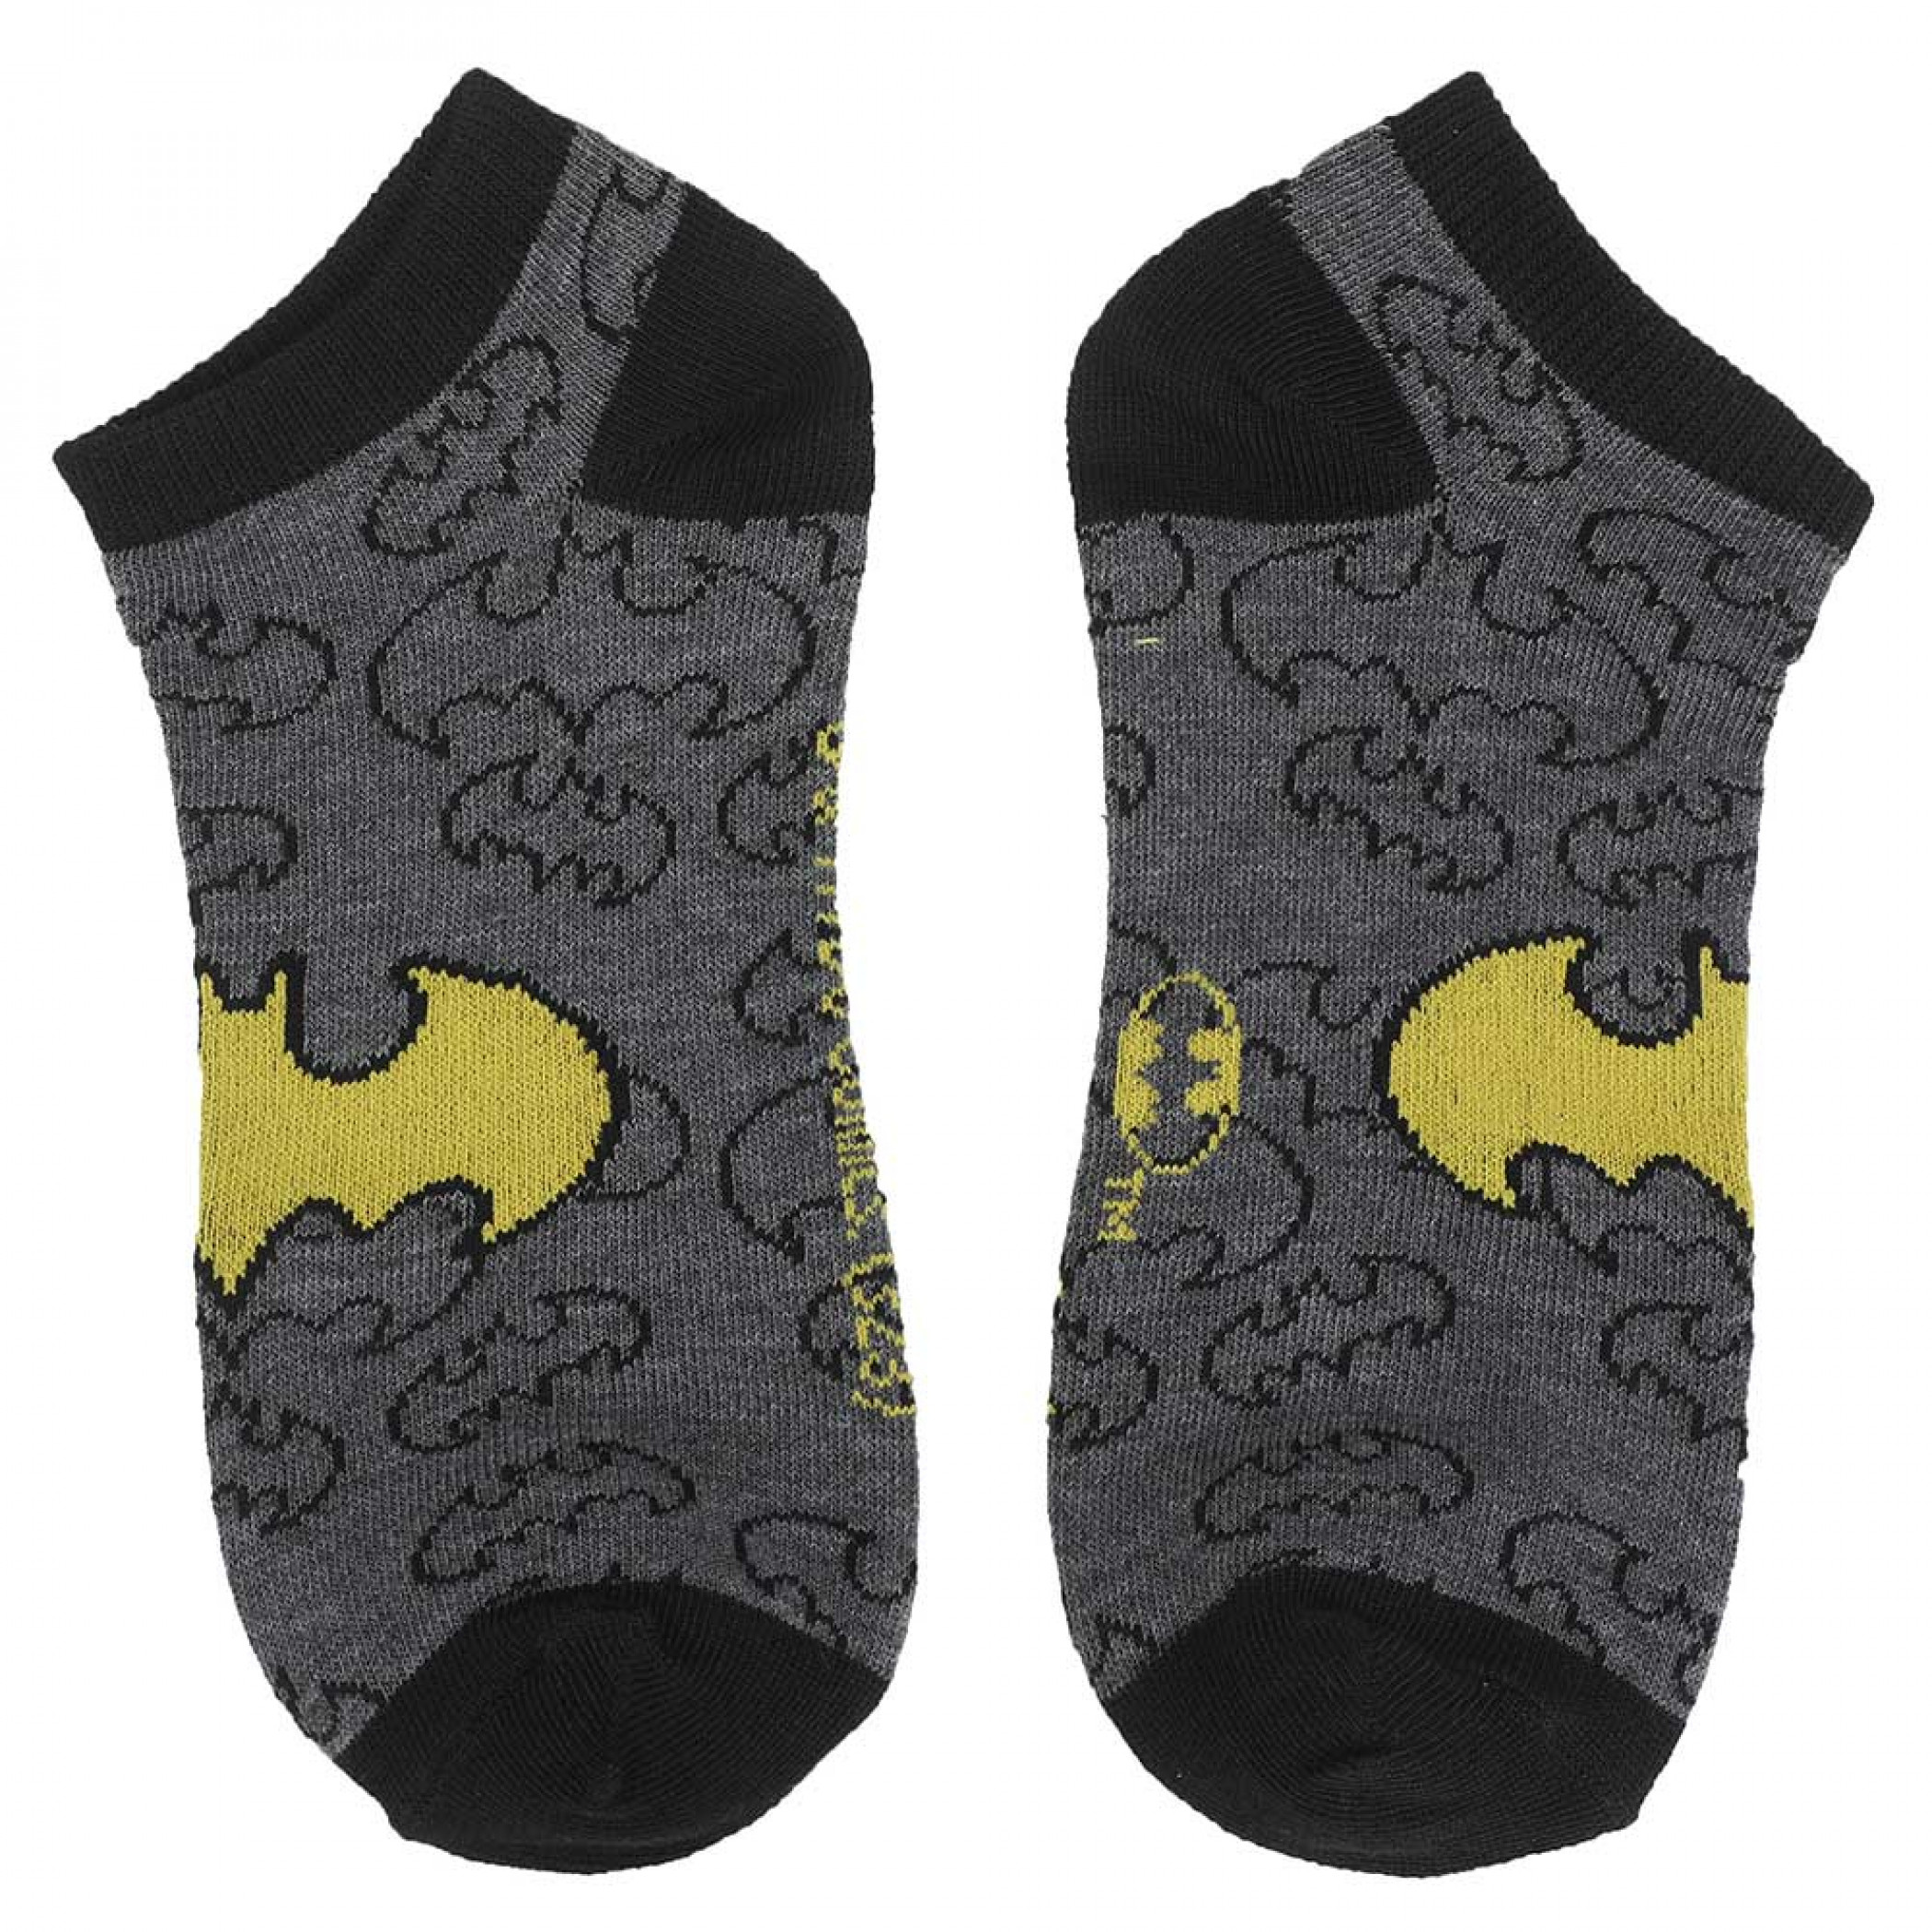 Batman Logos 5-Pair Pack of Ankle Socks